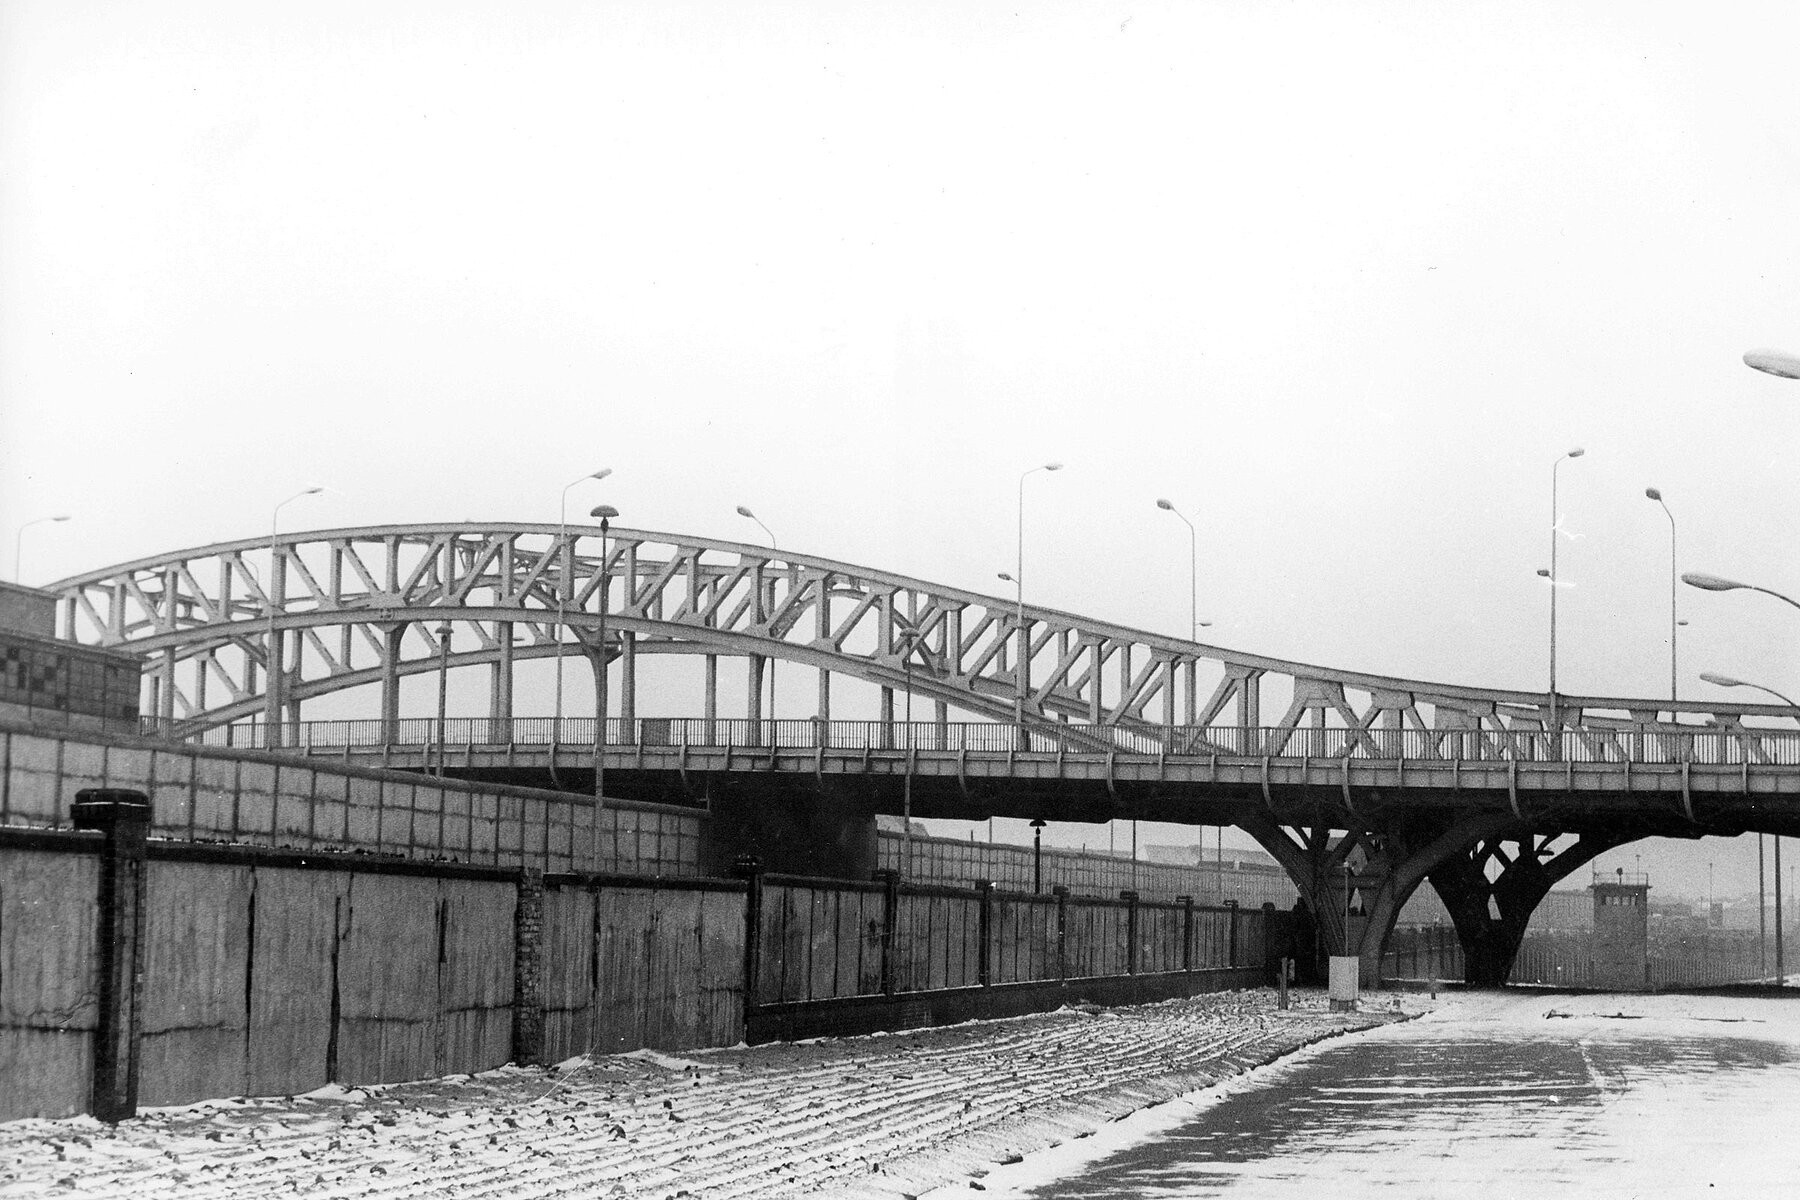 The Berlin Wall extends along the railroad tracks and underneath the Bösebrücke.